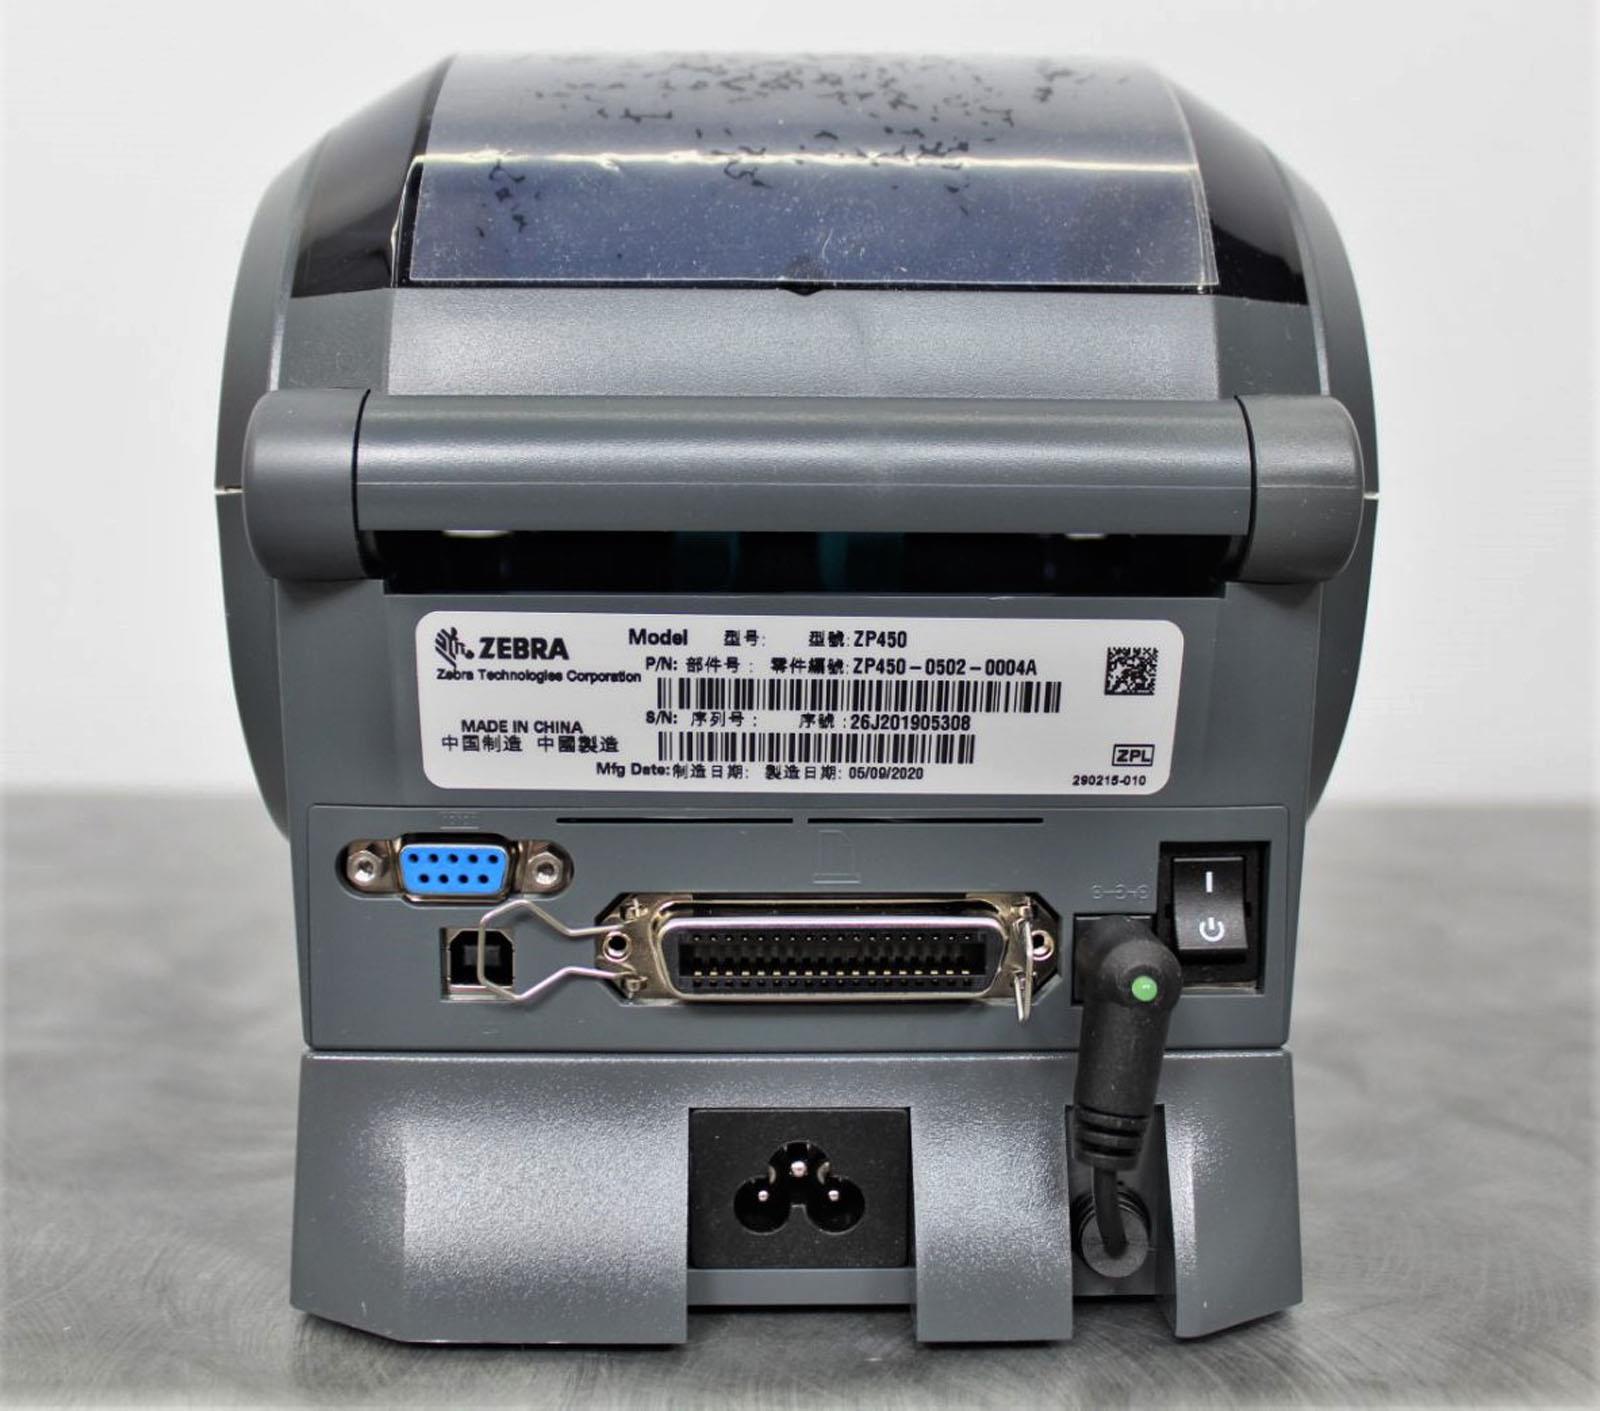 Zebra Zp450 Ctp Thermal Label Printer New In Box Zp450 0502 0004a With Warranty Ebay 8805